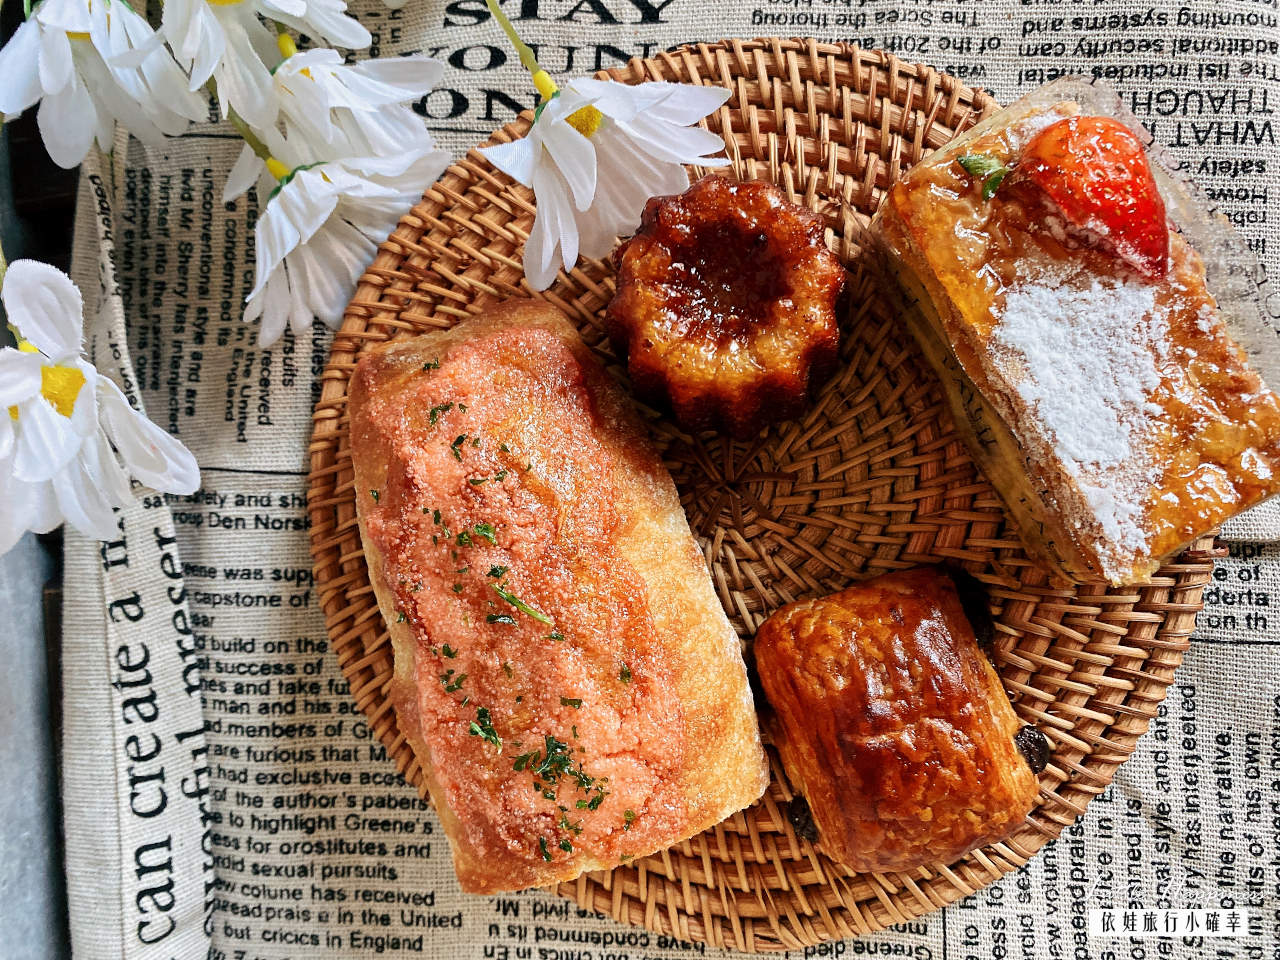 PAUL法國麵包甜點沙龍推出餐盒，很適合企業下午茶、貴賓會議點心、記者會伴手禮